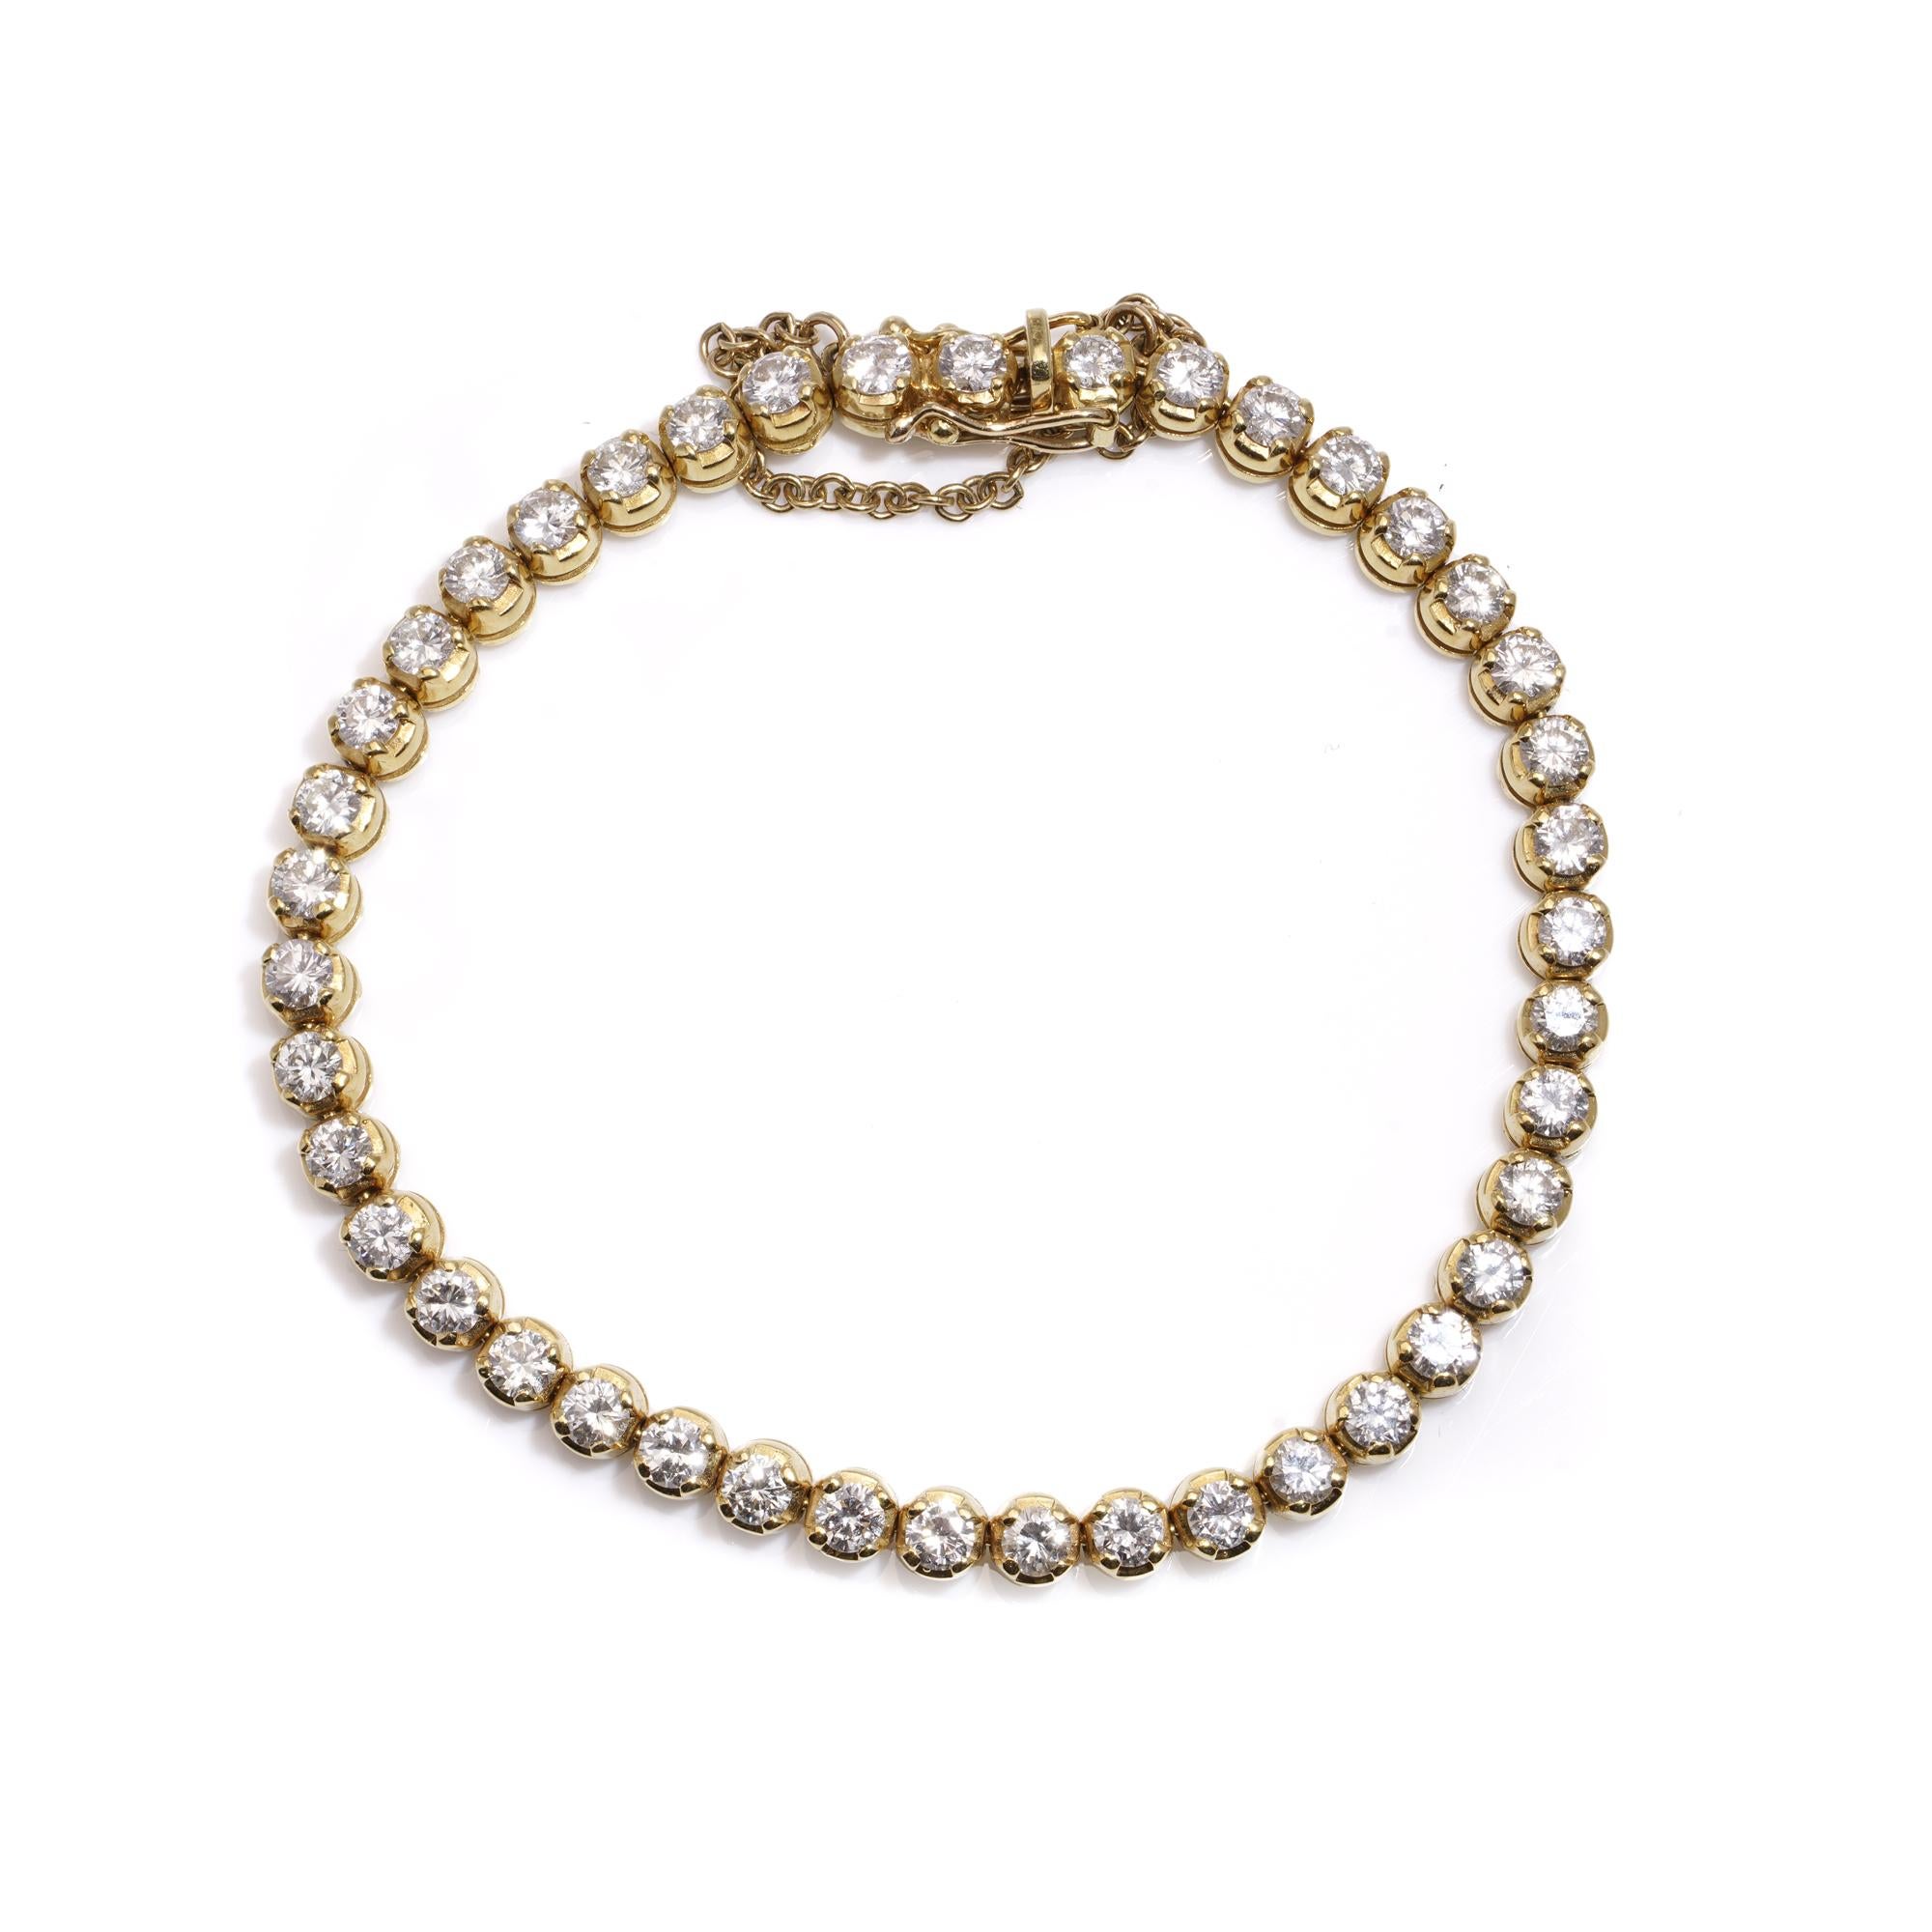 18kt gold tennis bracelet set with 6.30 carats of round brilliant diamonds  For Sale 4